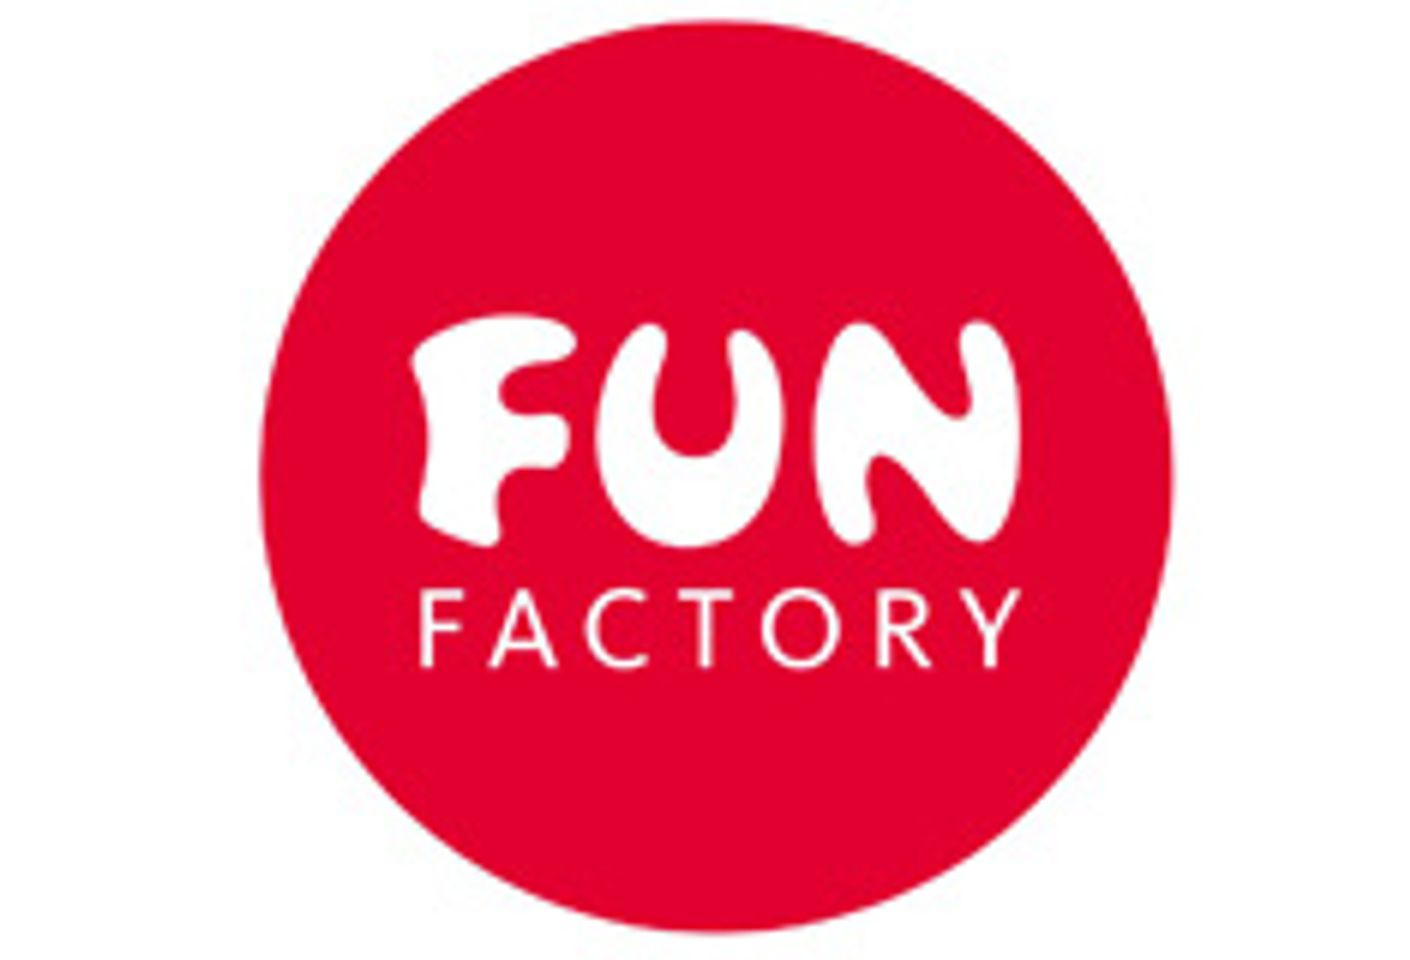 Fun Factory Wins StorErotica Award